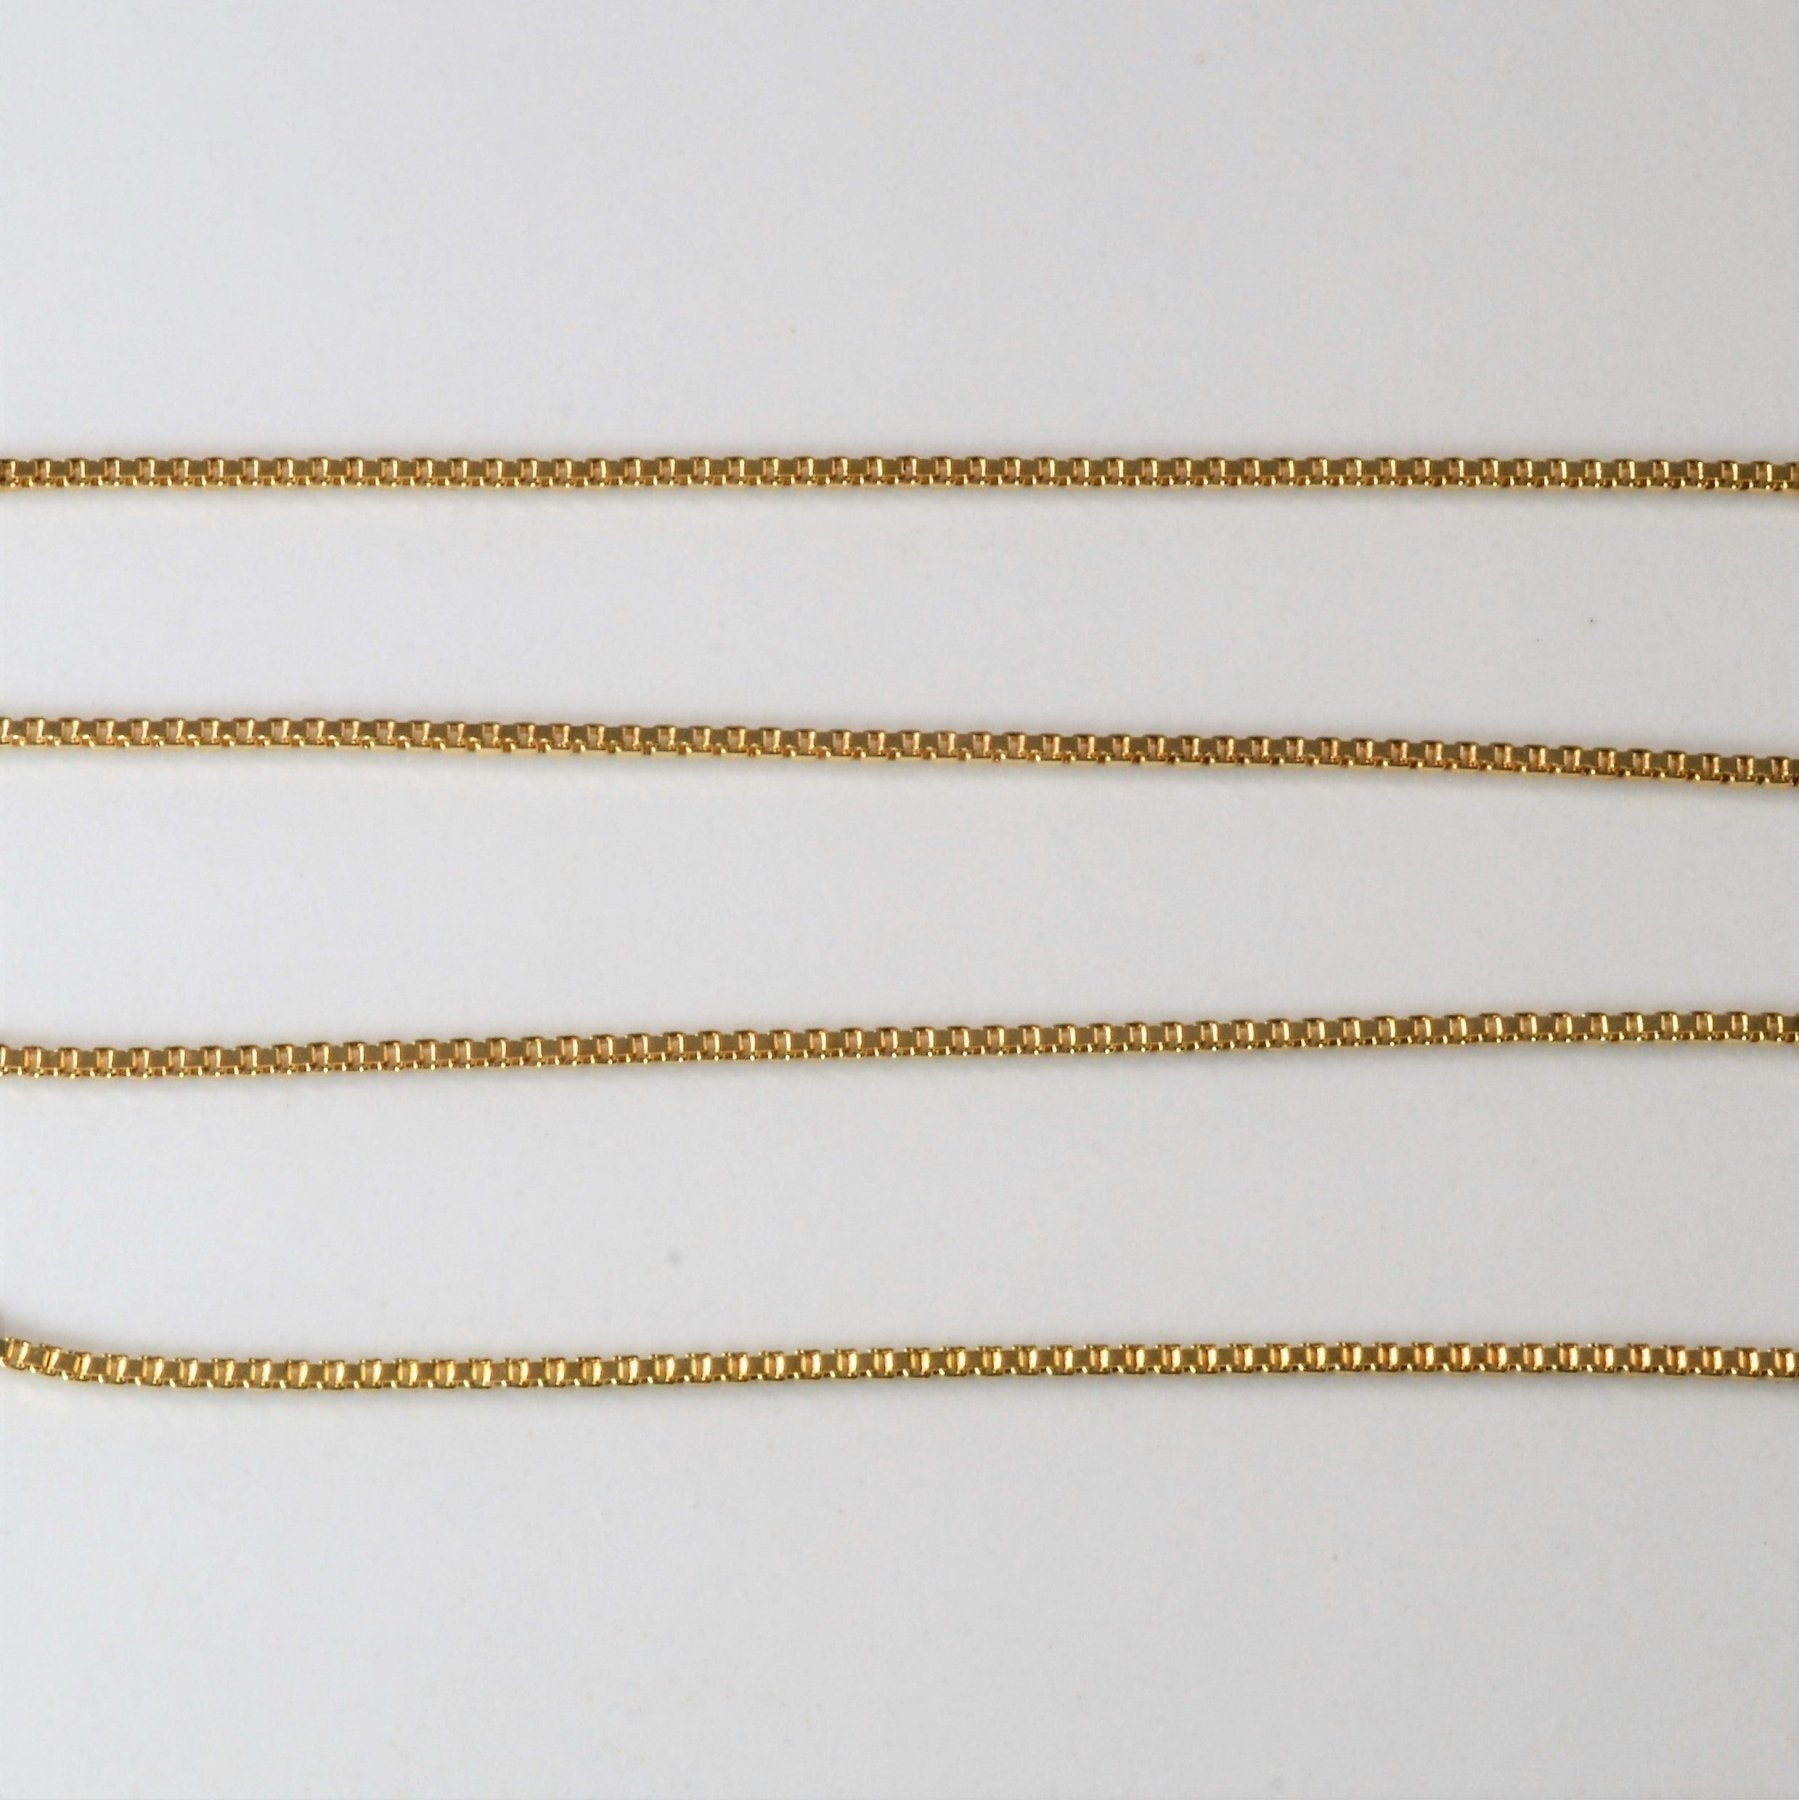 10k Gold Box Link Chain | 16